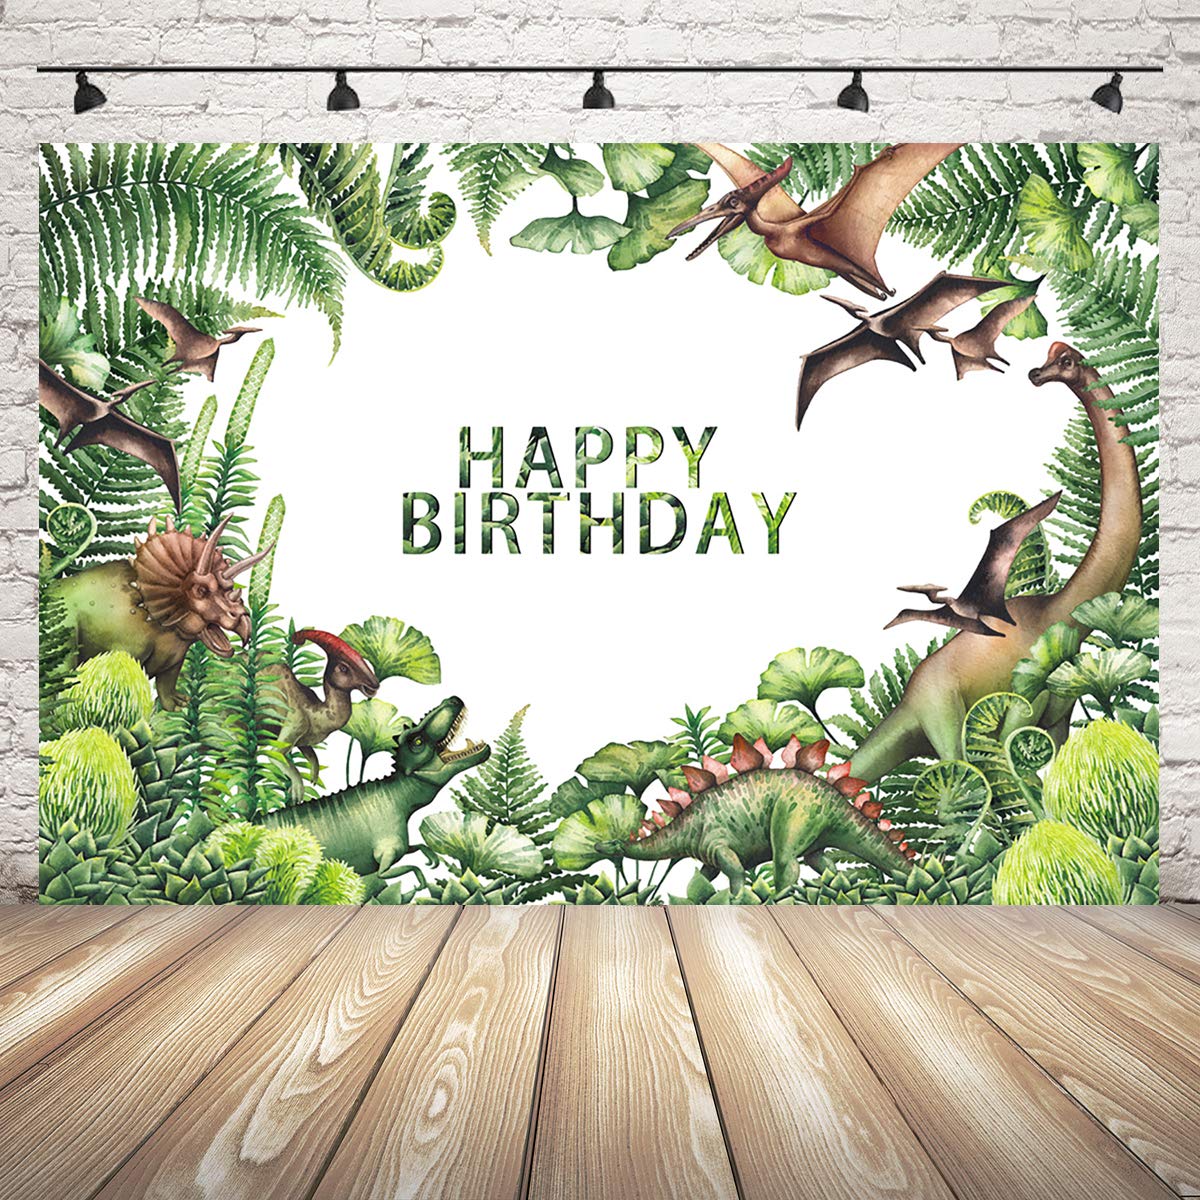 Dinosaur-Forest-Theme-Birthday-Backdrop-Vinyl-Studio-Backdrop-Photography-Props-Photo-Background-Dec-1635645